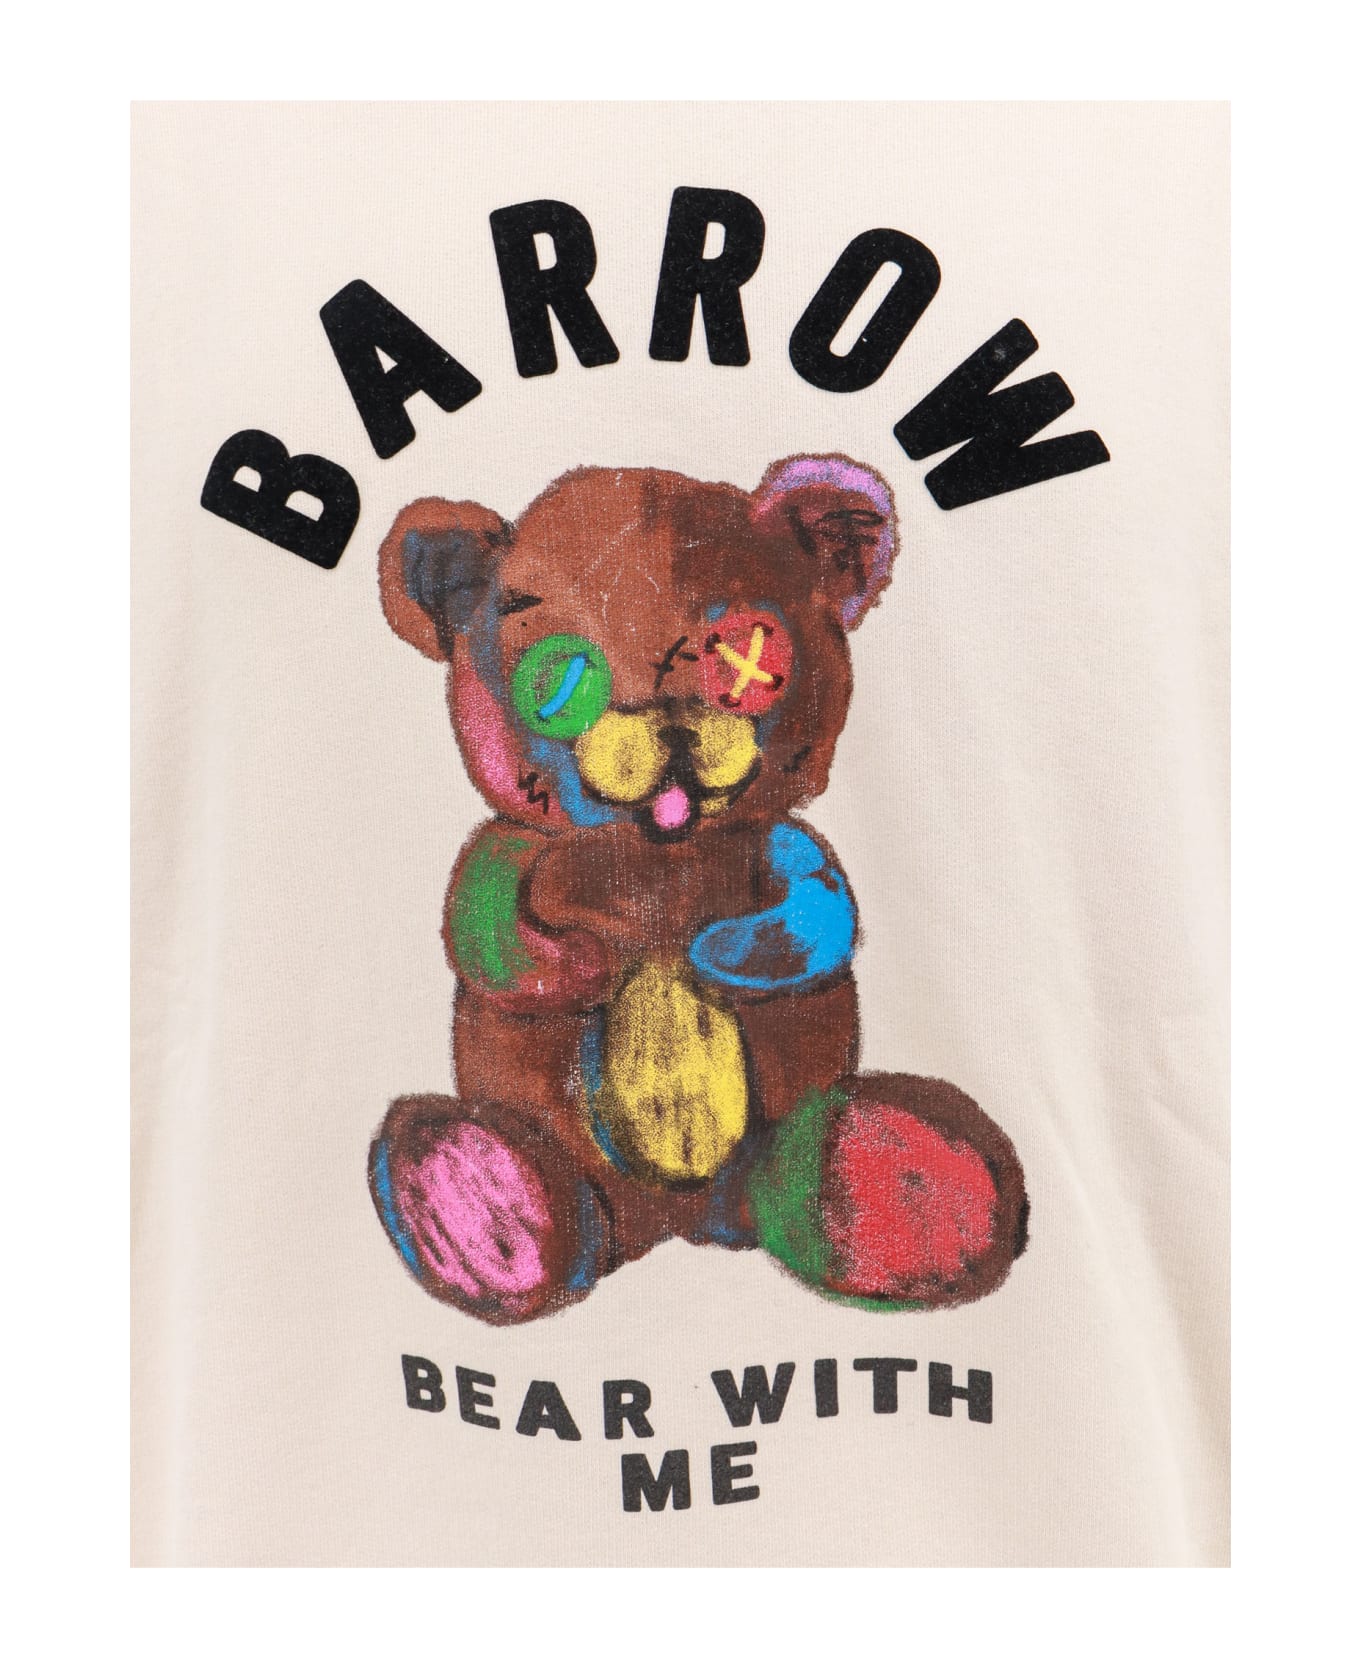 Barrow Sweatshirt - Beige フリース